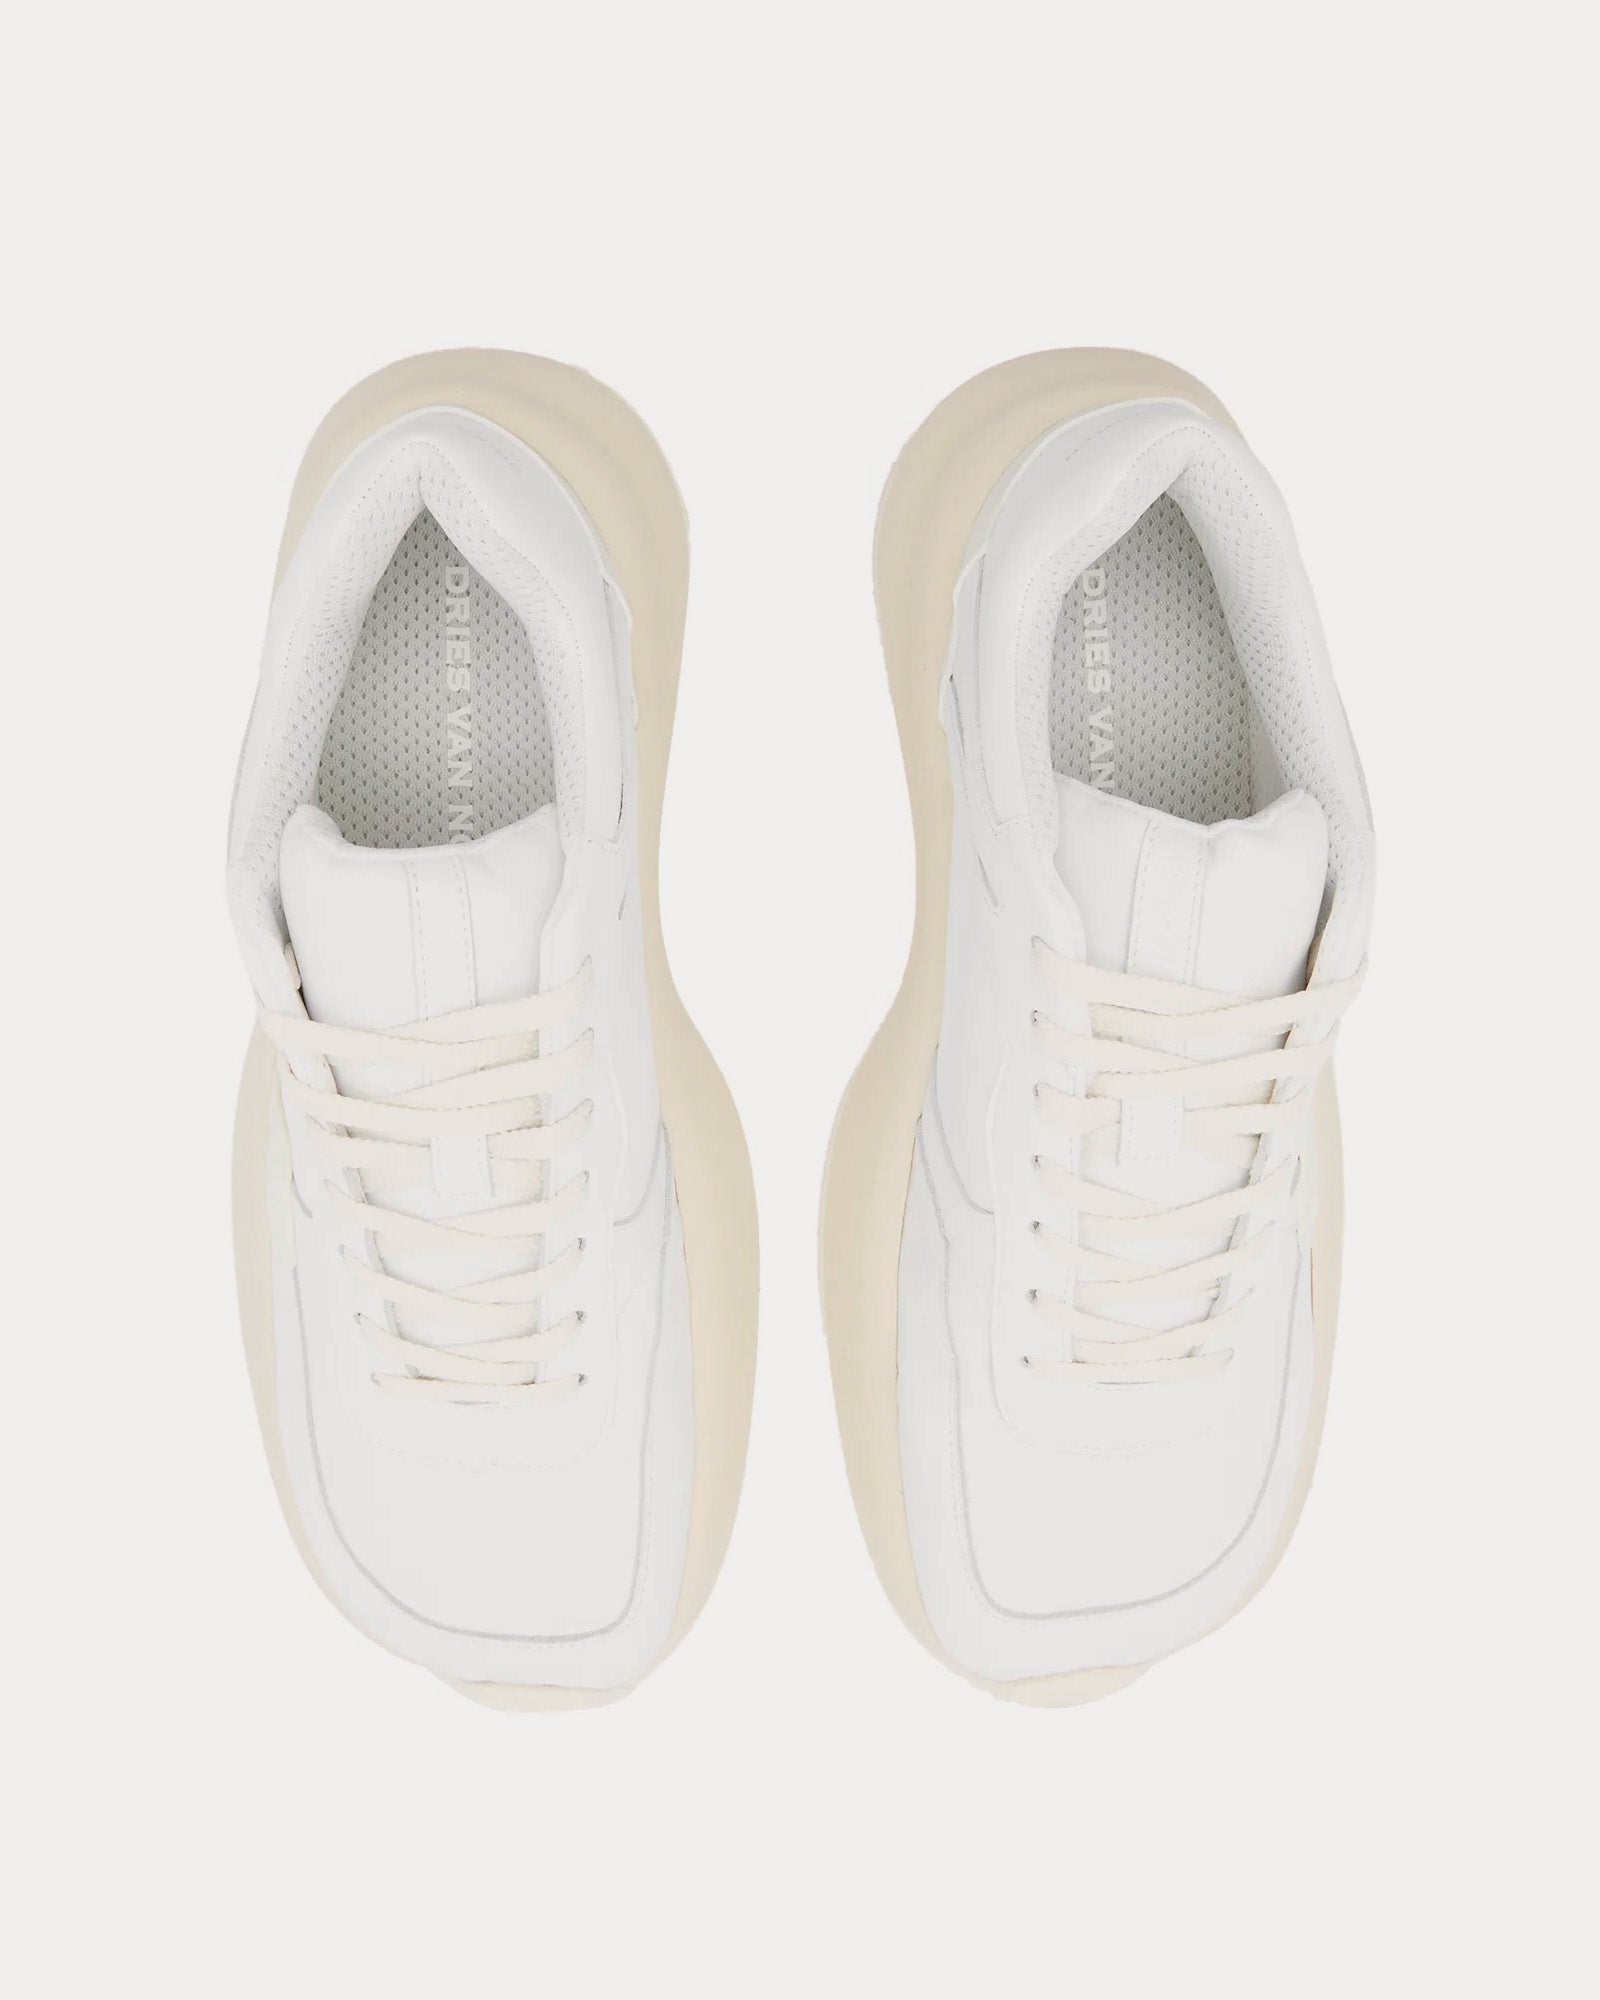 Dries Van Noten - Oversized Leather White Low Top Sneakers